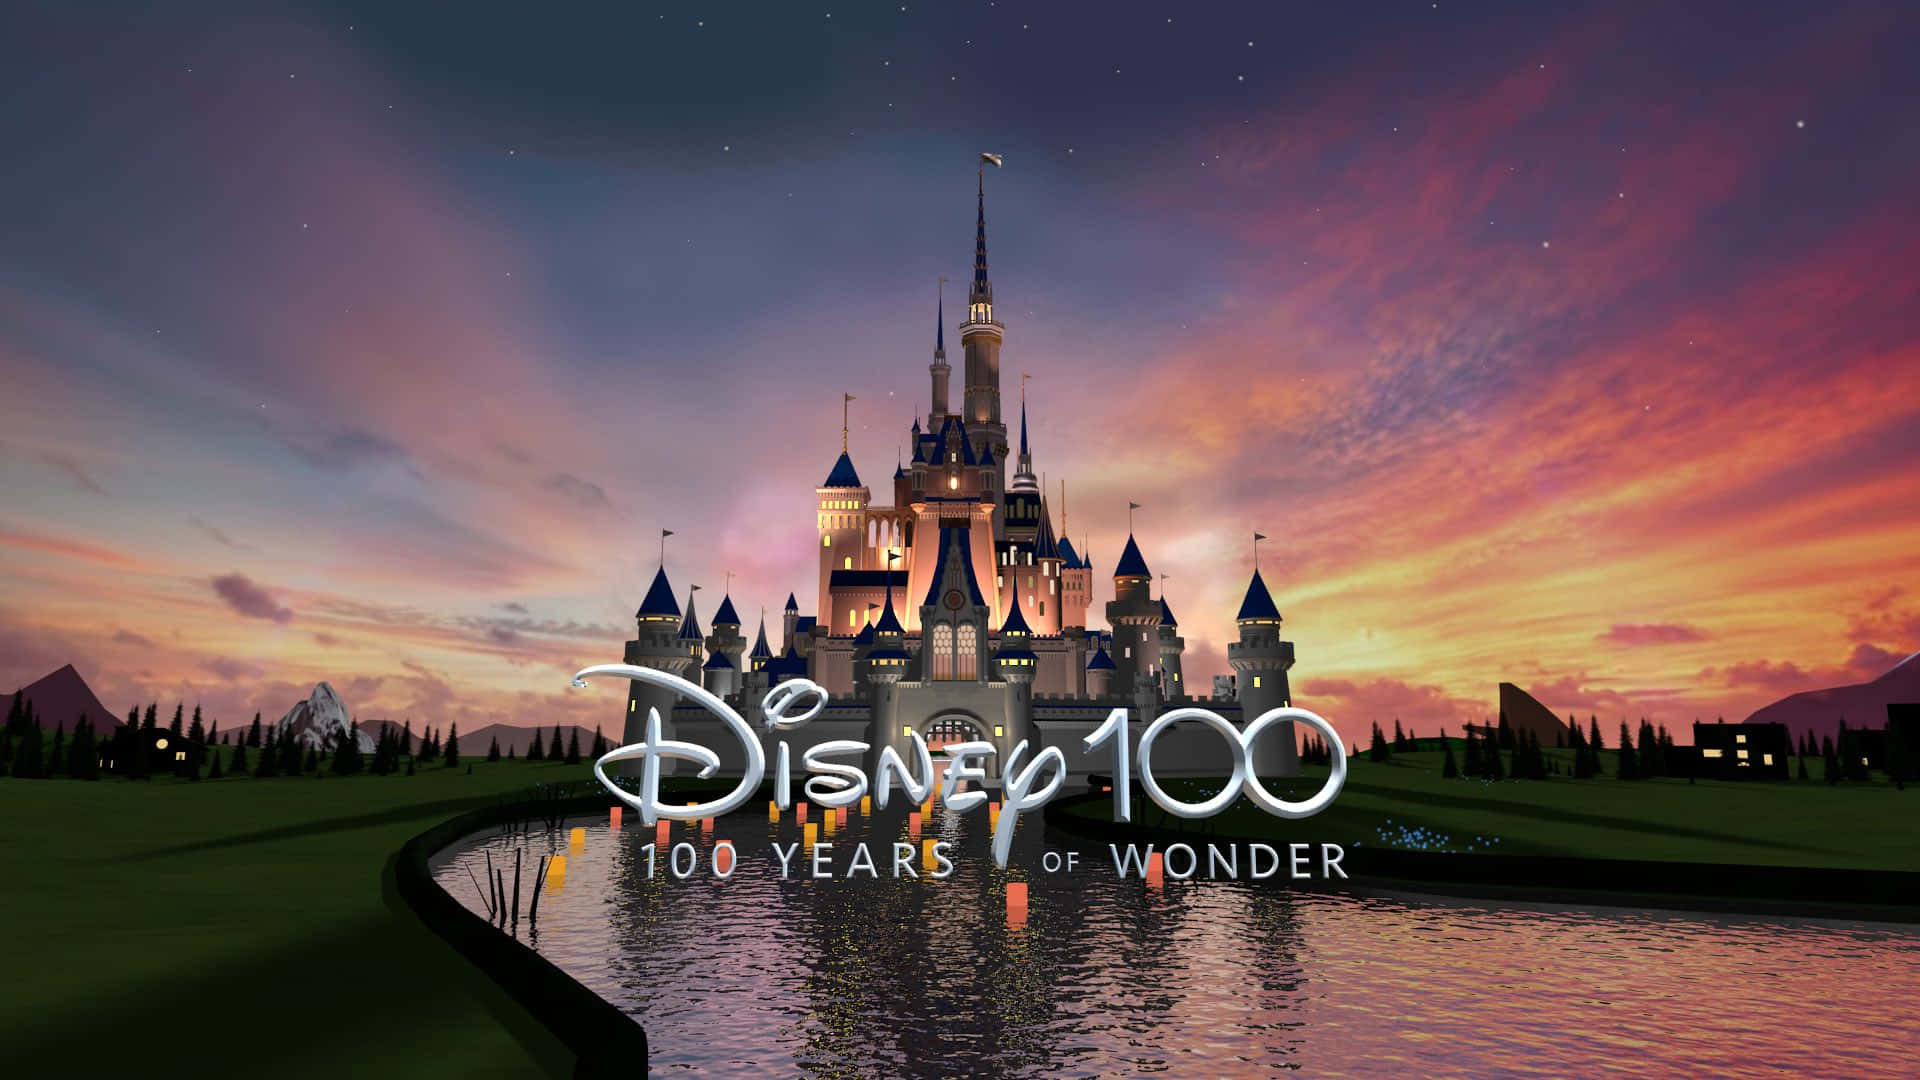 Disney100 Yearsof Wonder Celebration Castle Wallpaper